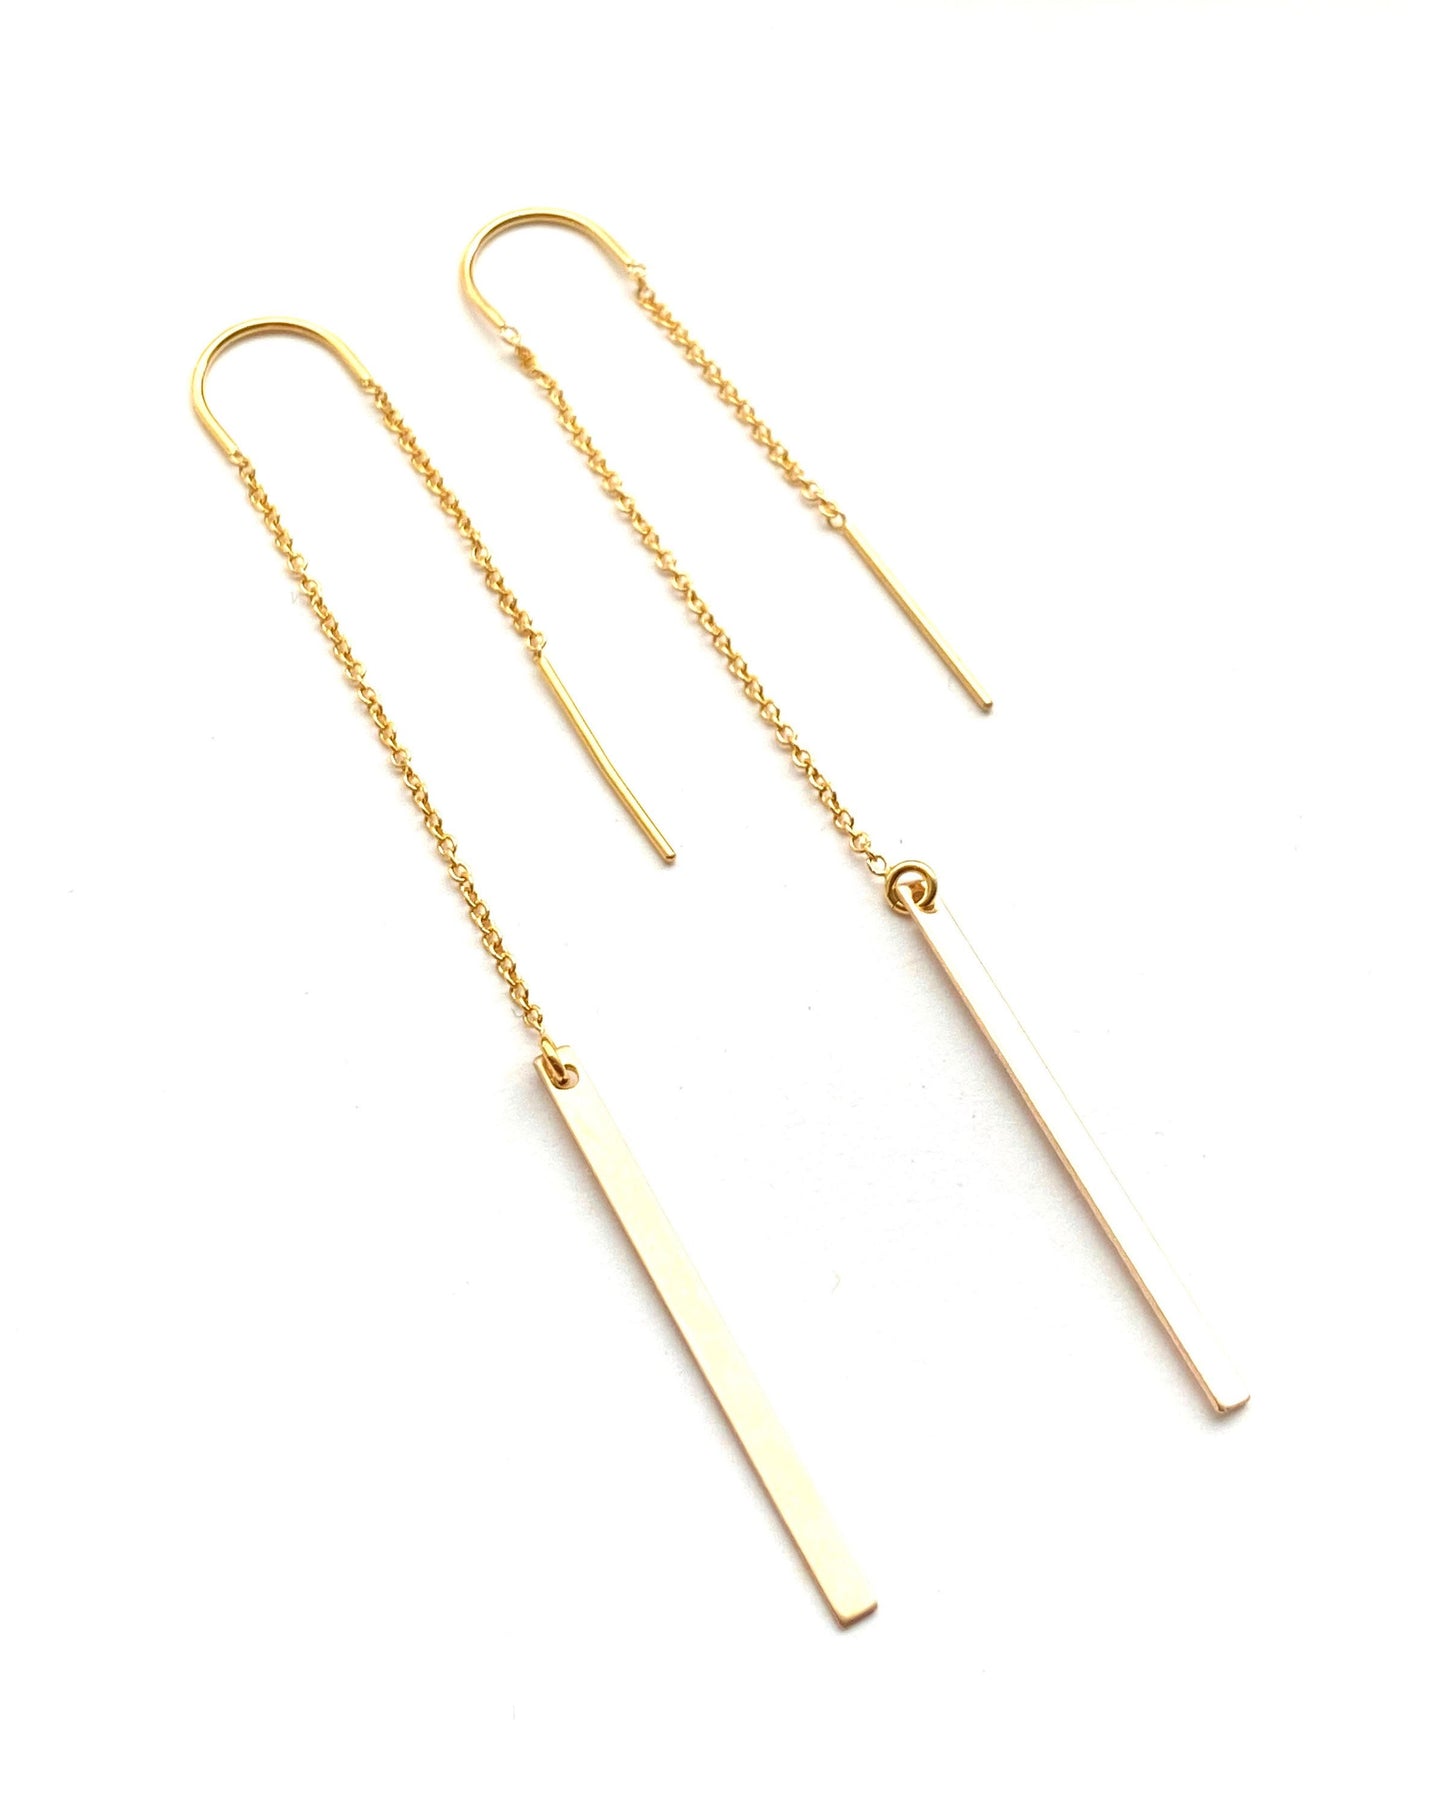 Fixed U threader earrings, minimalist bar (14K gold-filled)